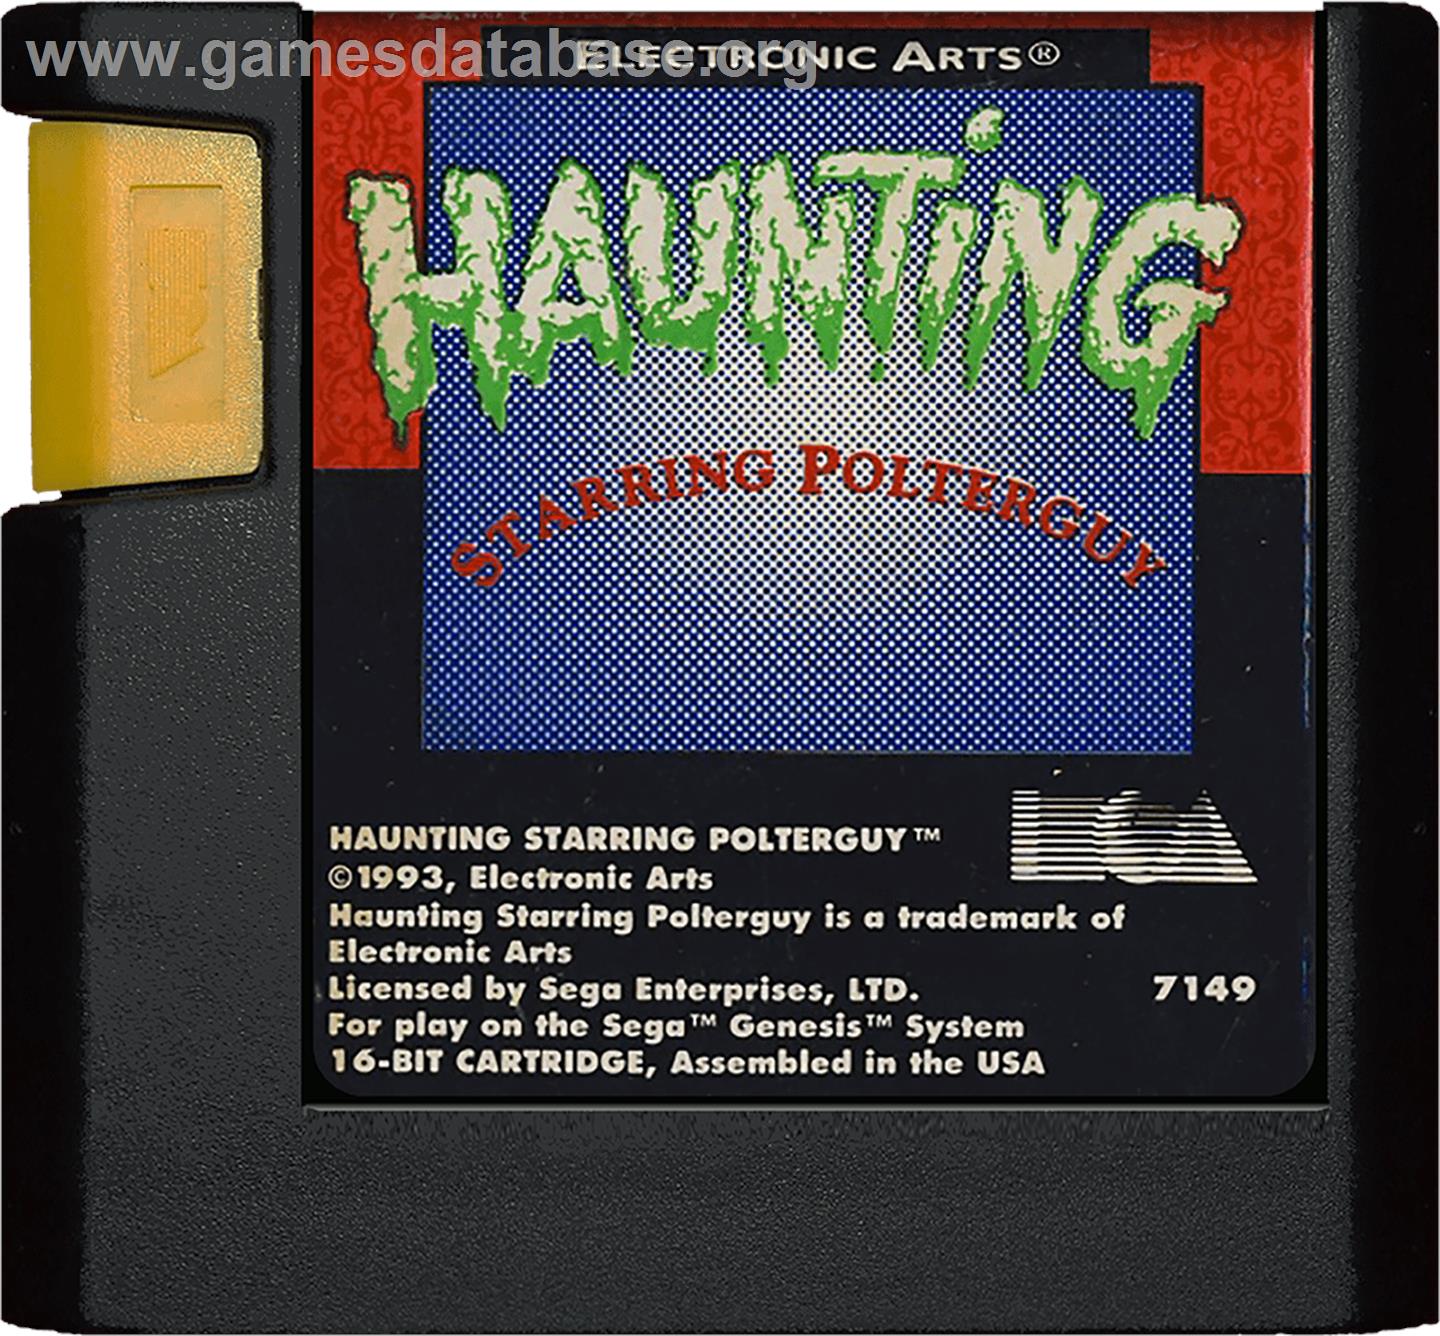 Haunting Starring Polterguy - Sega Genesis - Artwork - Cartridge